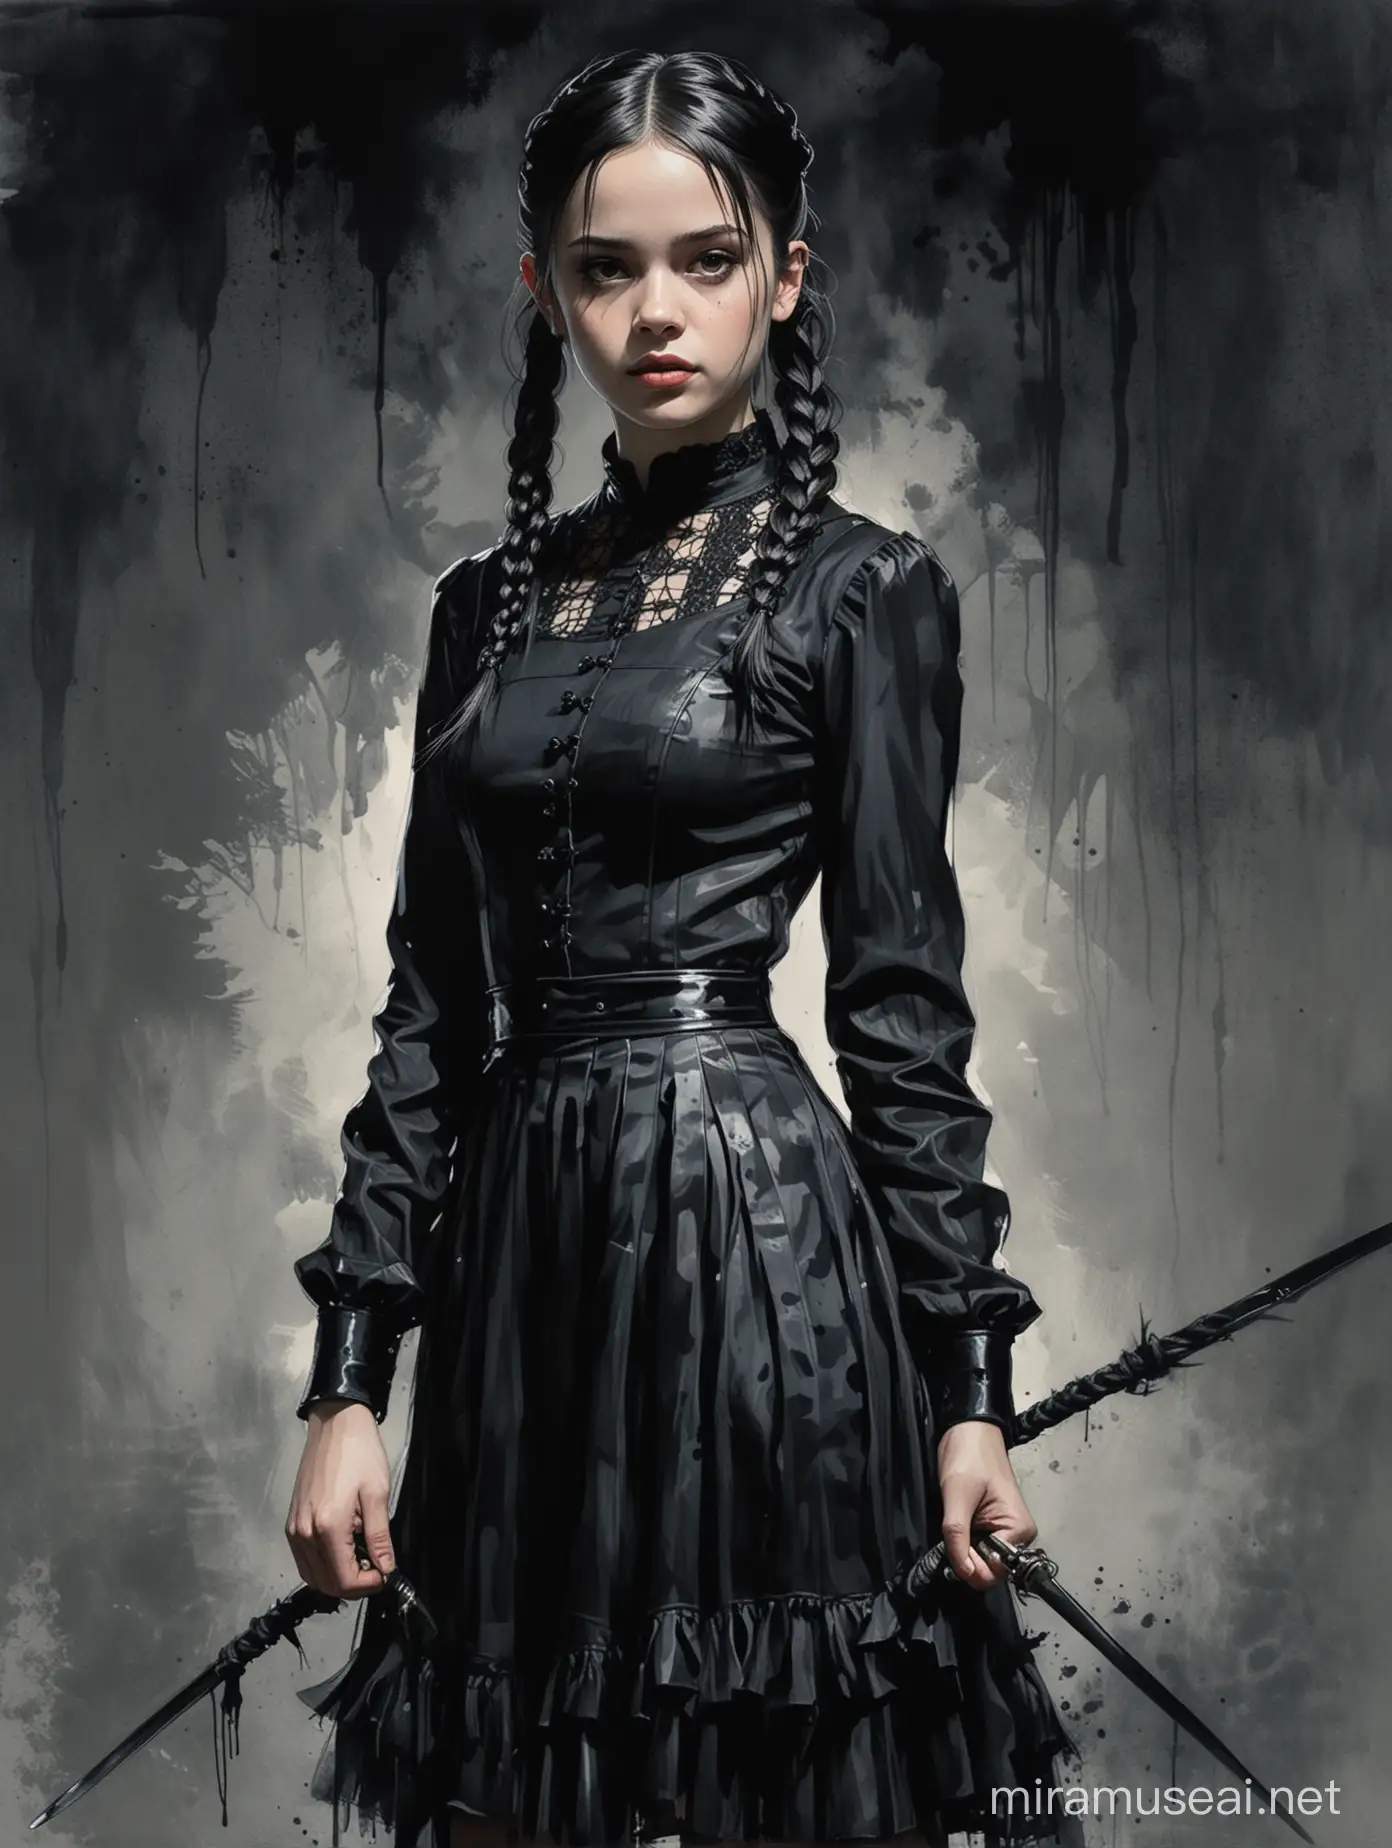 Pale Jenna Ortega as Wednesday Addams in Dramatic Fencing Dress Illustration